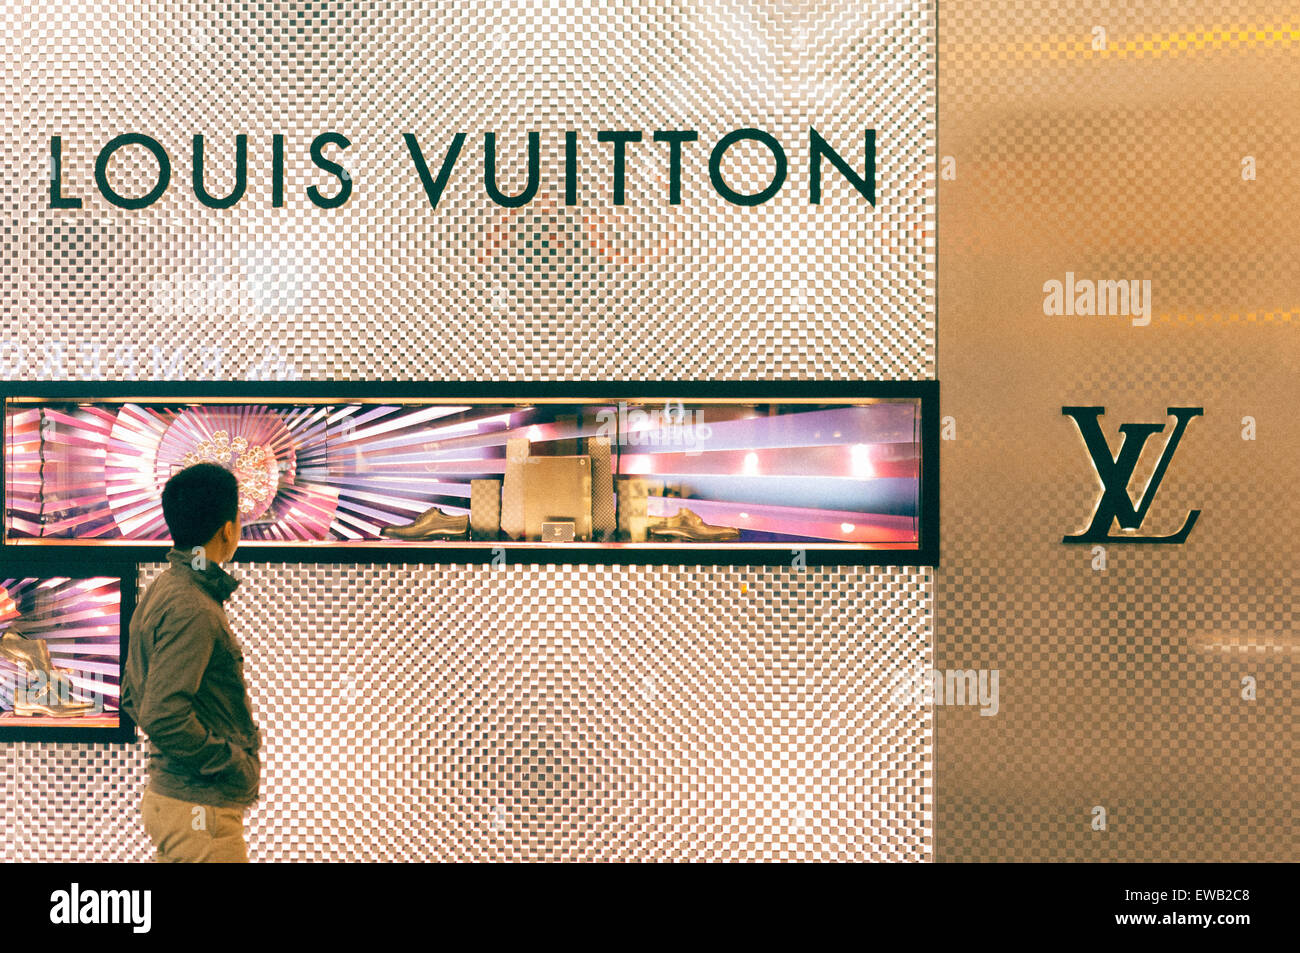 Louis Vuitton Hong Kong Airport store, Hong Kong SAR